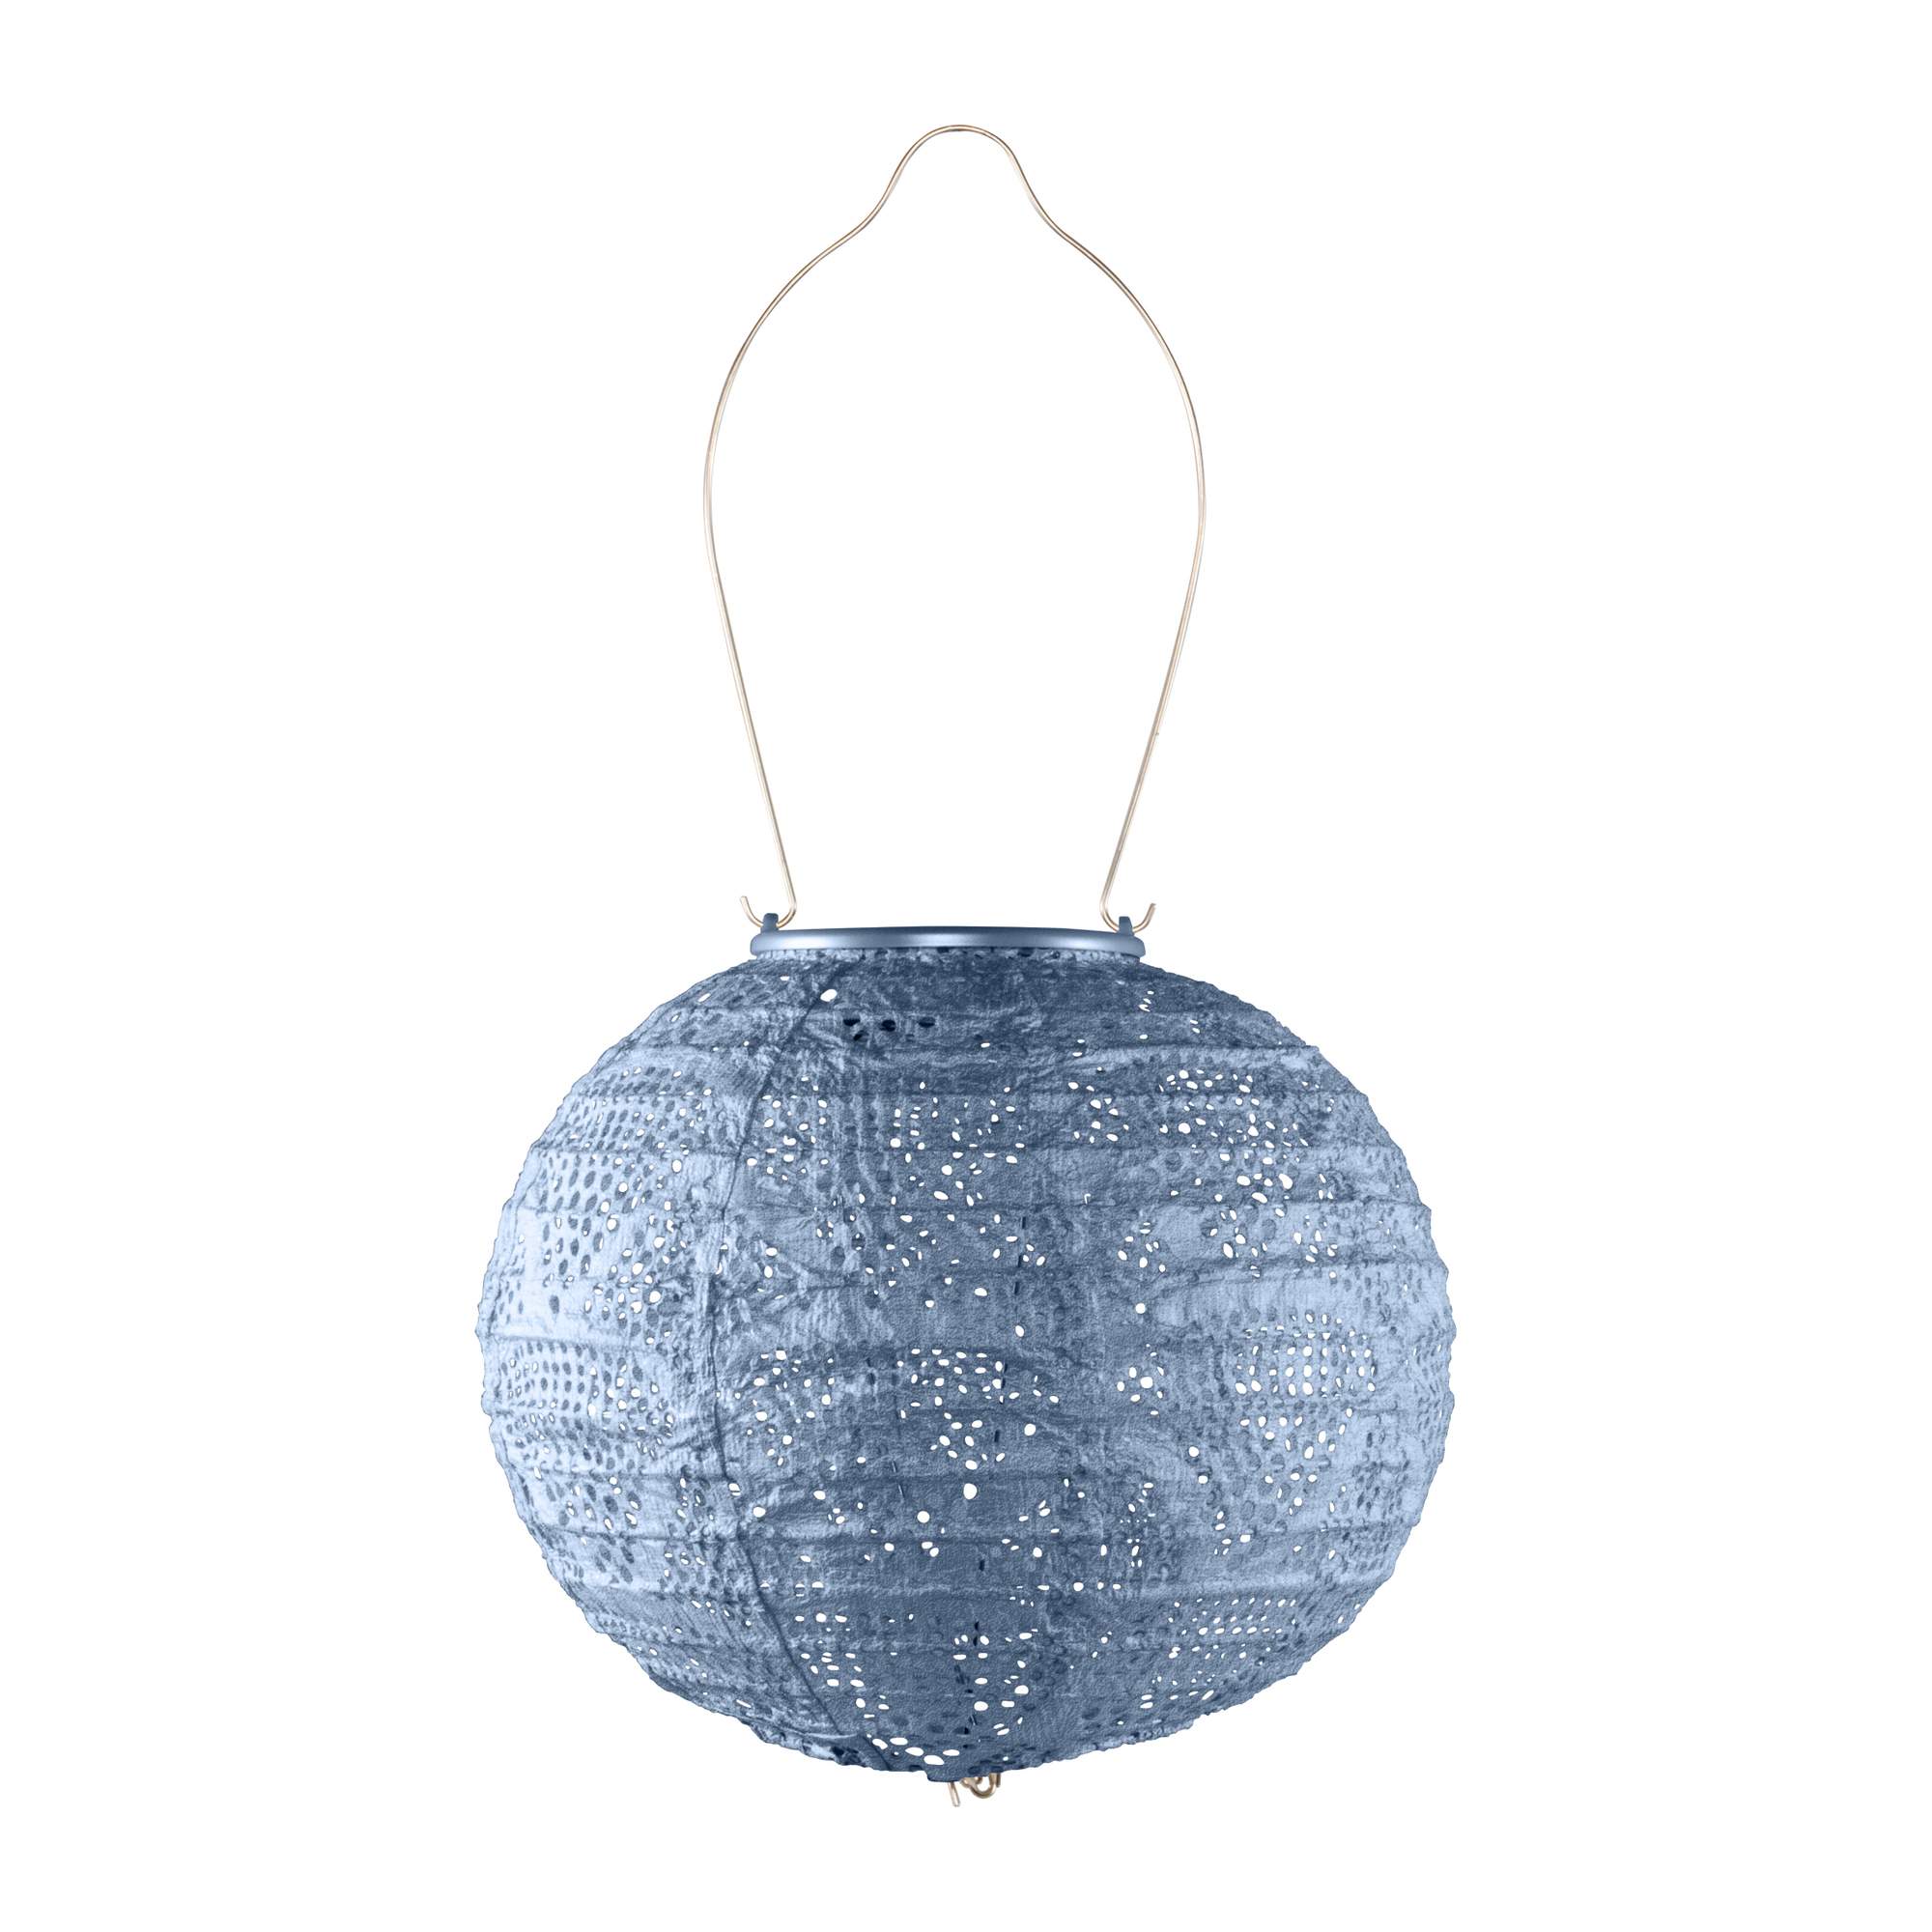 Allsop Home and Garden, Soji Stella Globe - Metallic Blue, Color Blue, Included (qty.) 1 Model 32026